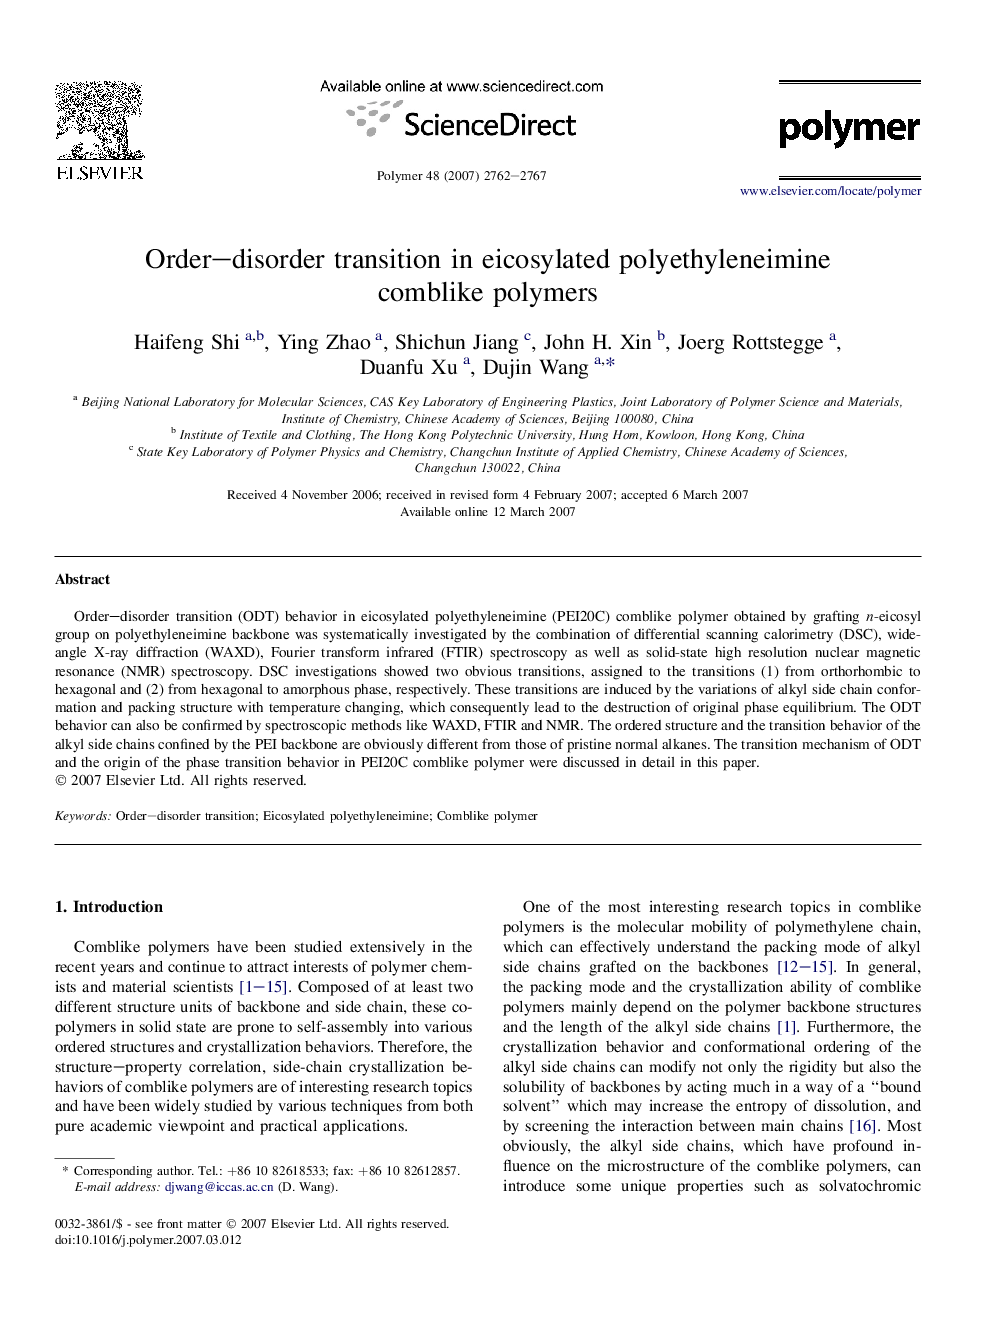 Order-disorder transition in eicosylated polyethyleneimine comblike polymers